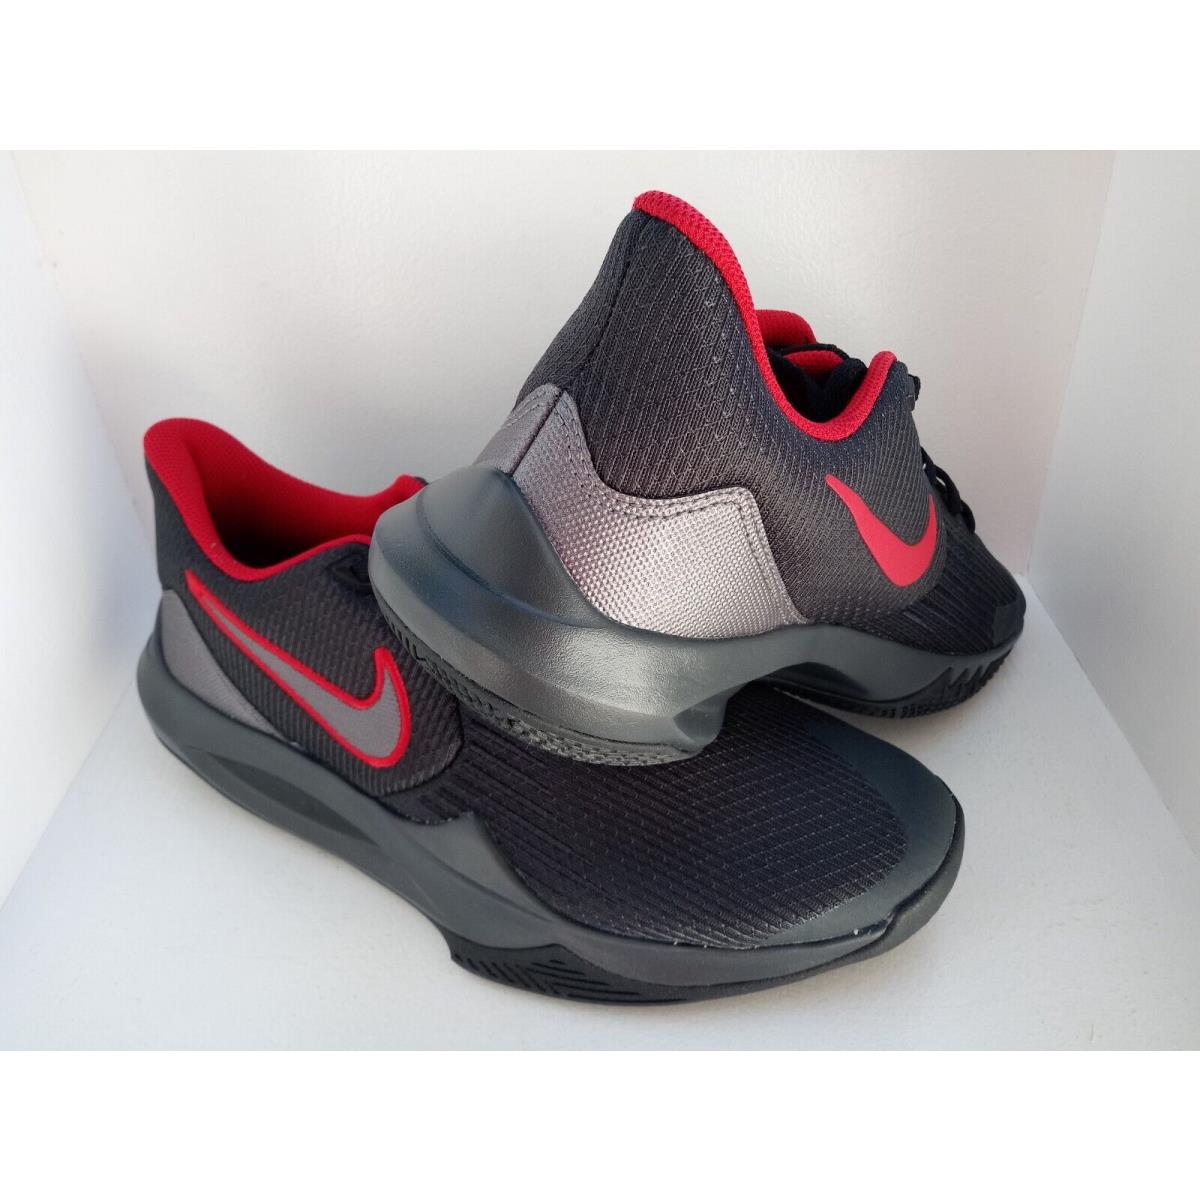 Nike shoes Precision - ANTHRACITE/MTLC DARK GREY 3